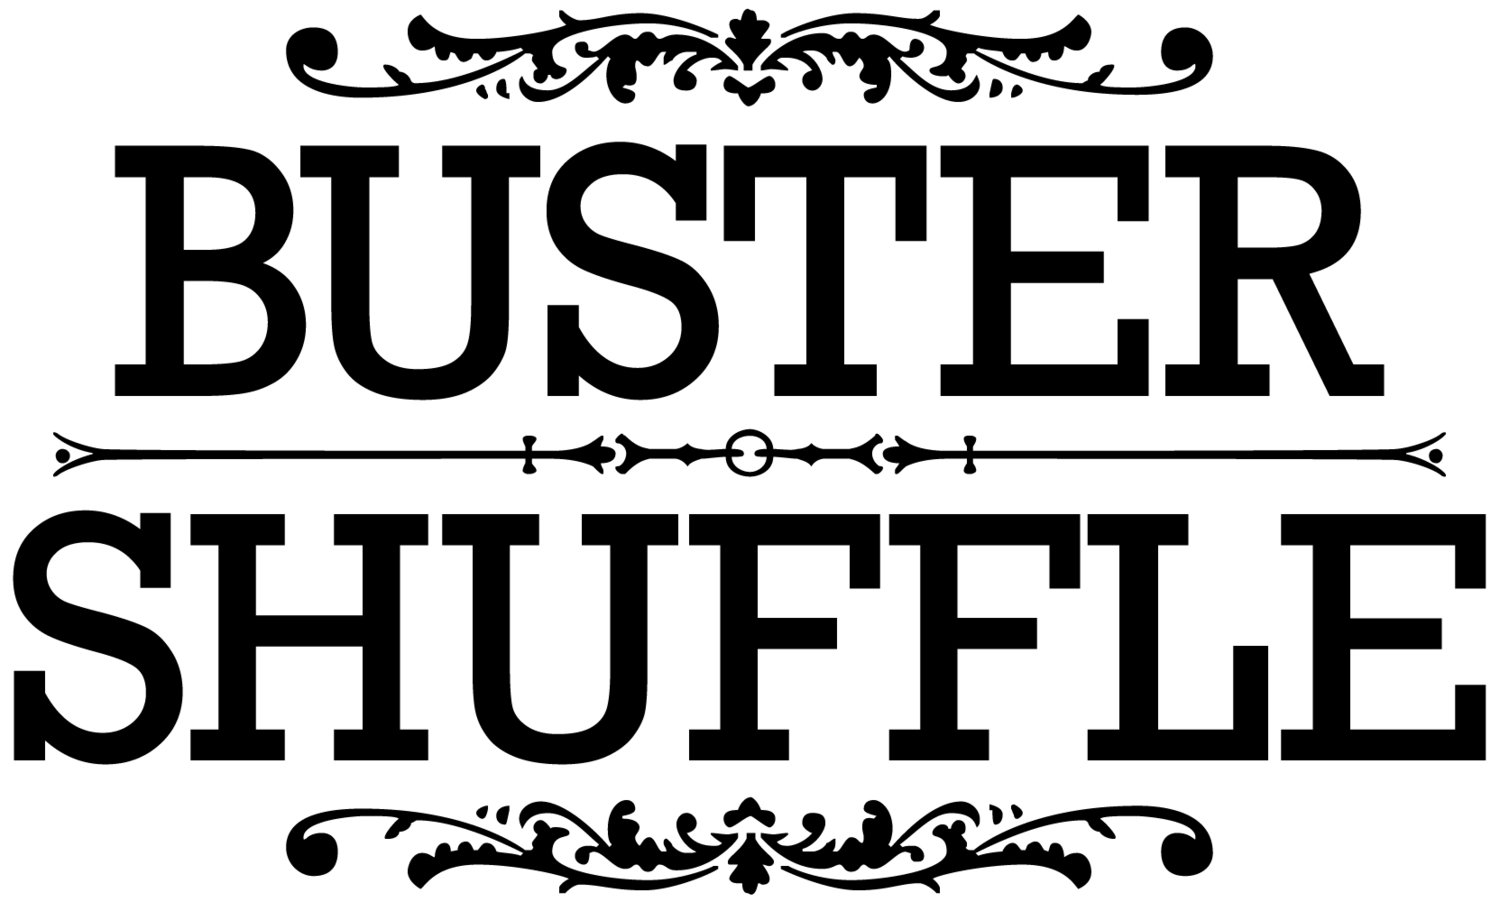 bustershufflemusic.com